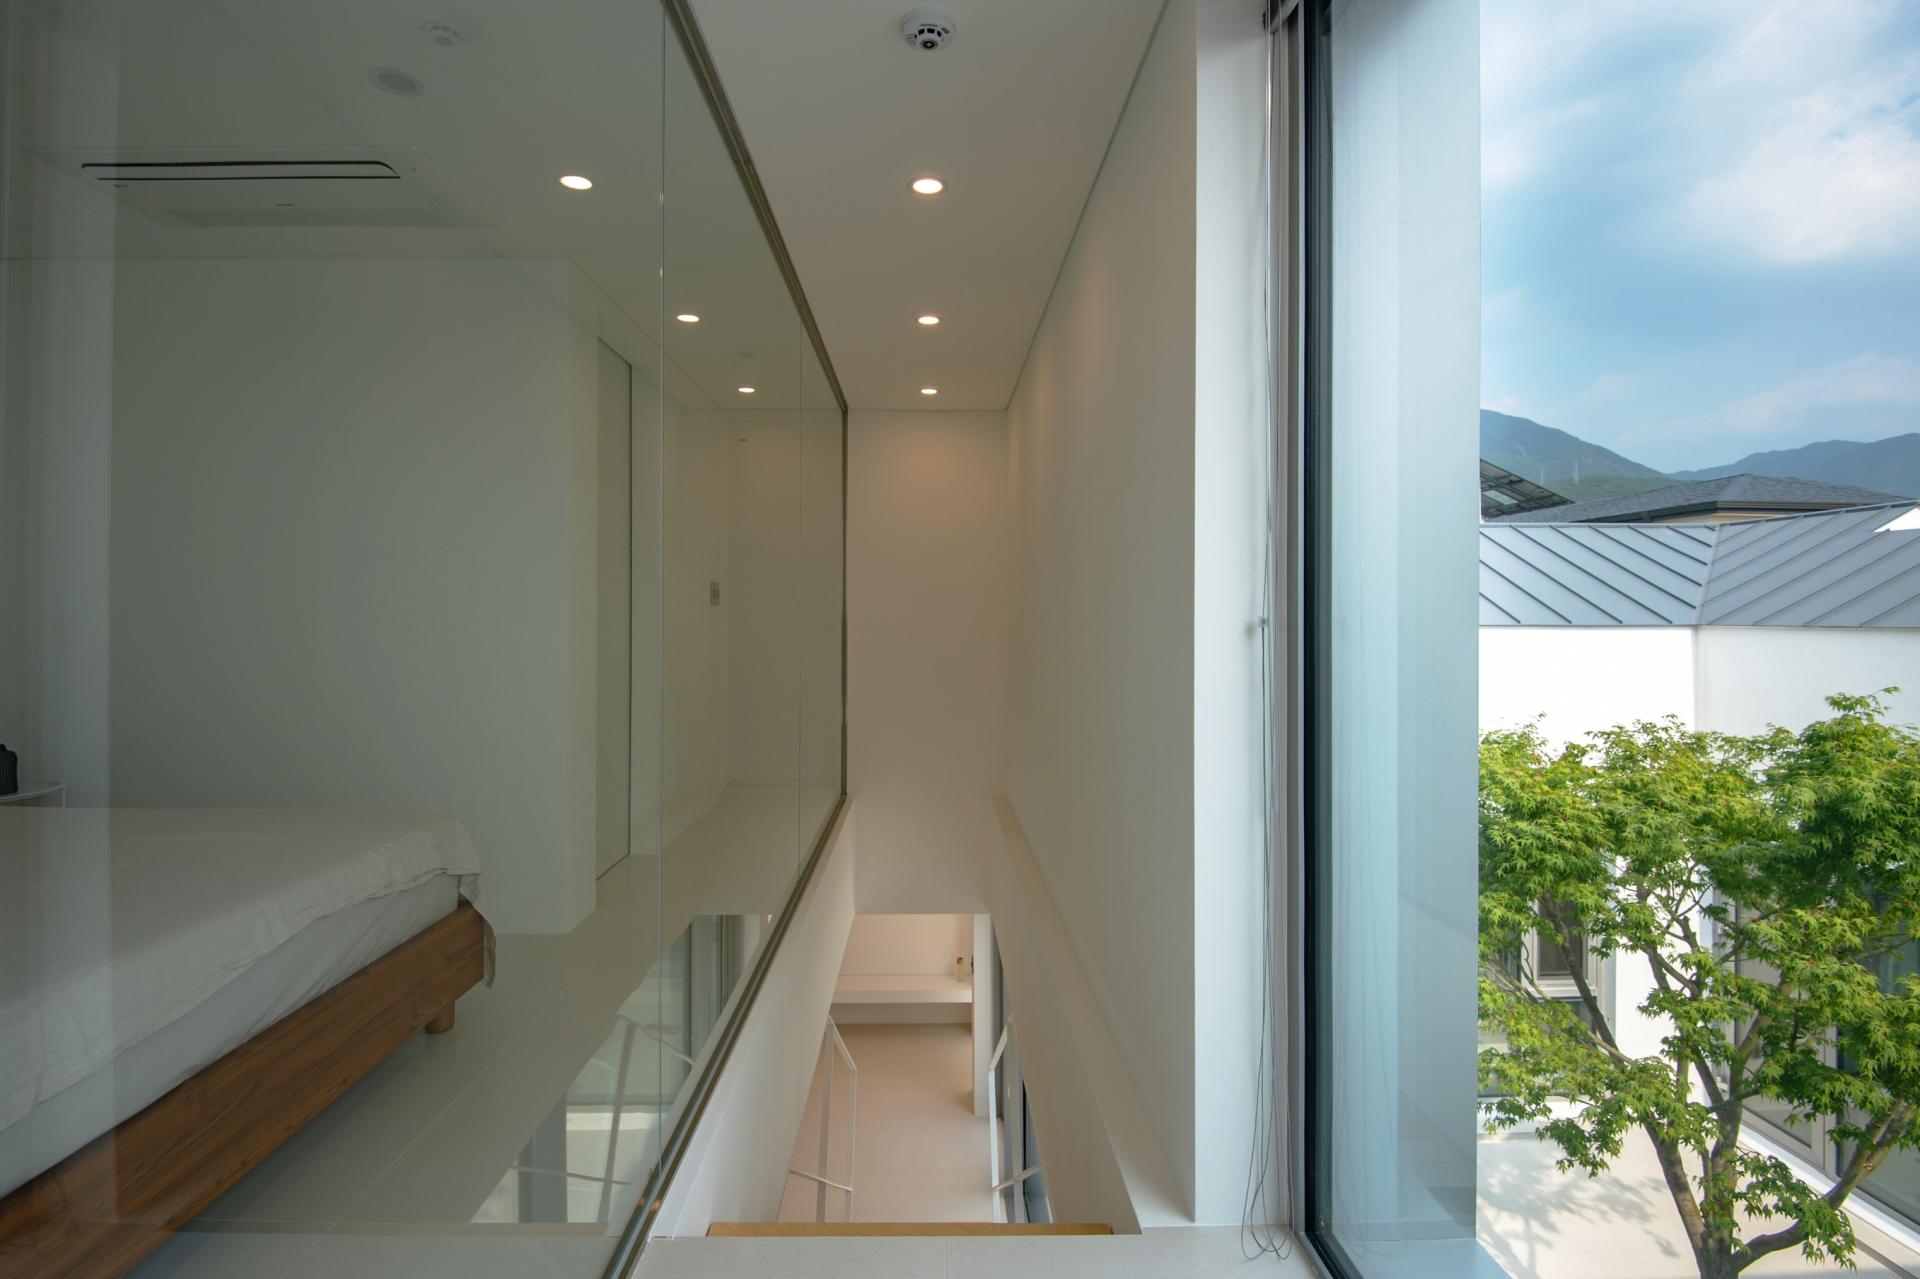 Step inside the minimalist house 337ROOF in Daegu, South Korea